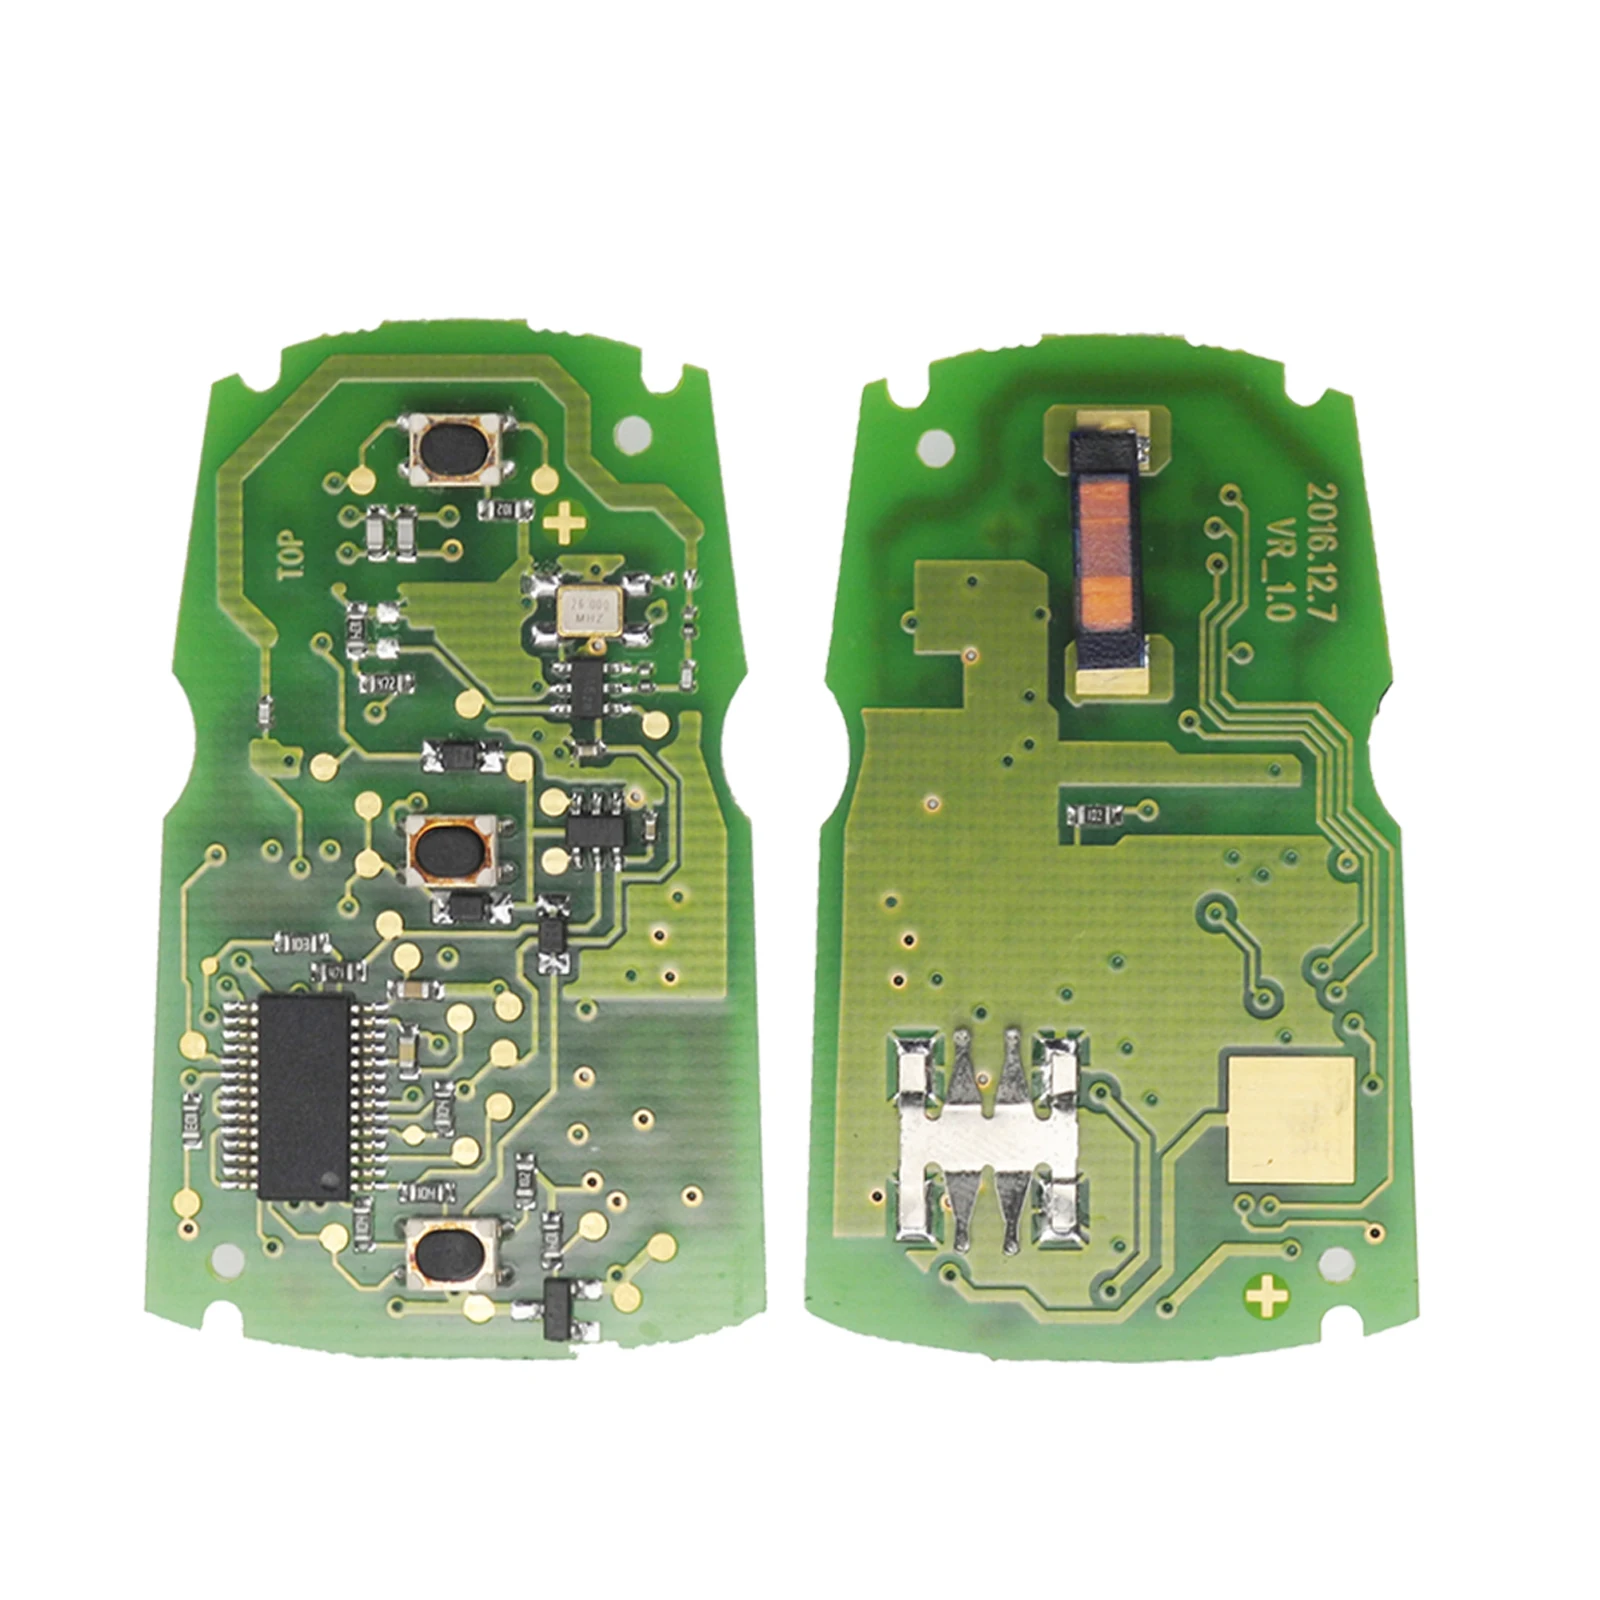 Jingyuqin Fjernstyret Bil Smart Key 315/868MHZ ID46 Chip Til BMW 1/3/5/7 Serie CAS3 X5 X6 Z4 Bil Keyless Kontrol-Senderen